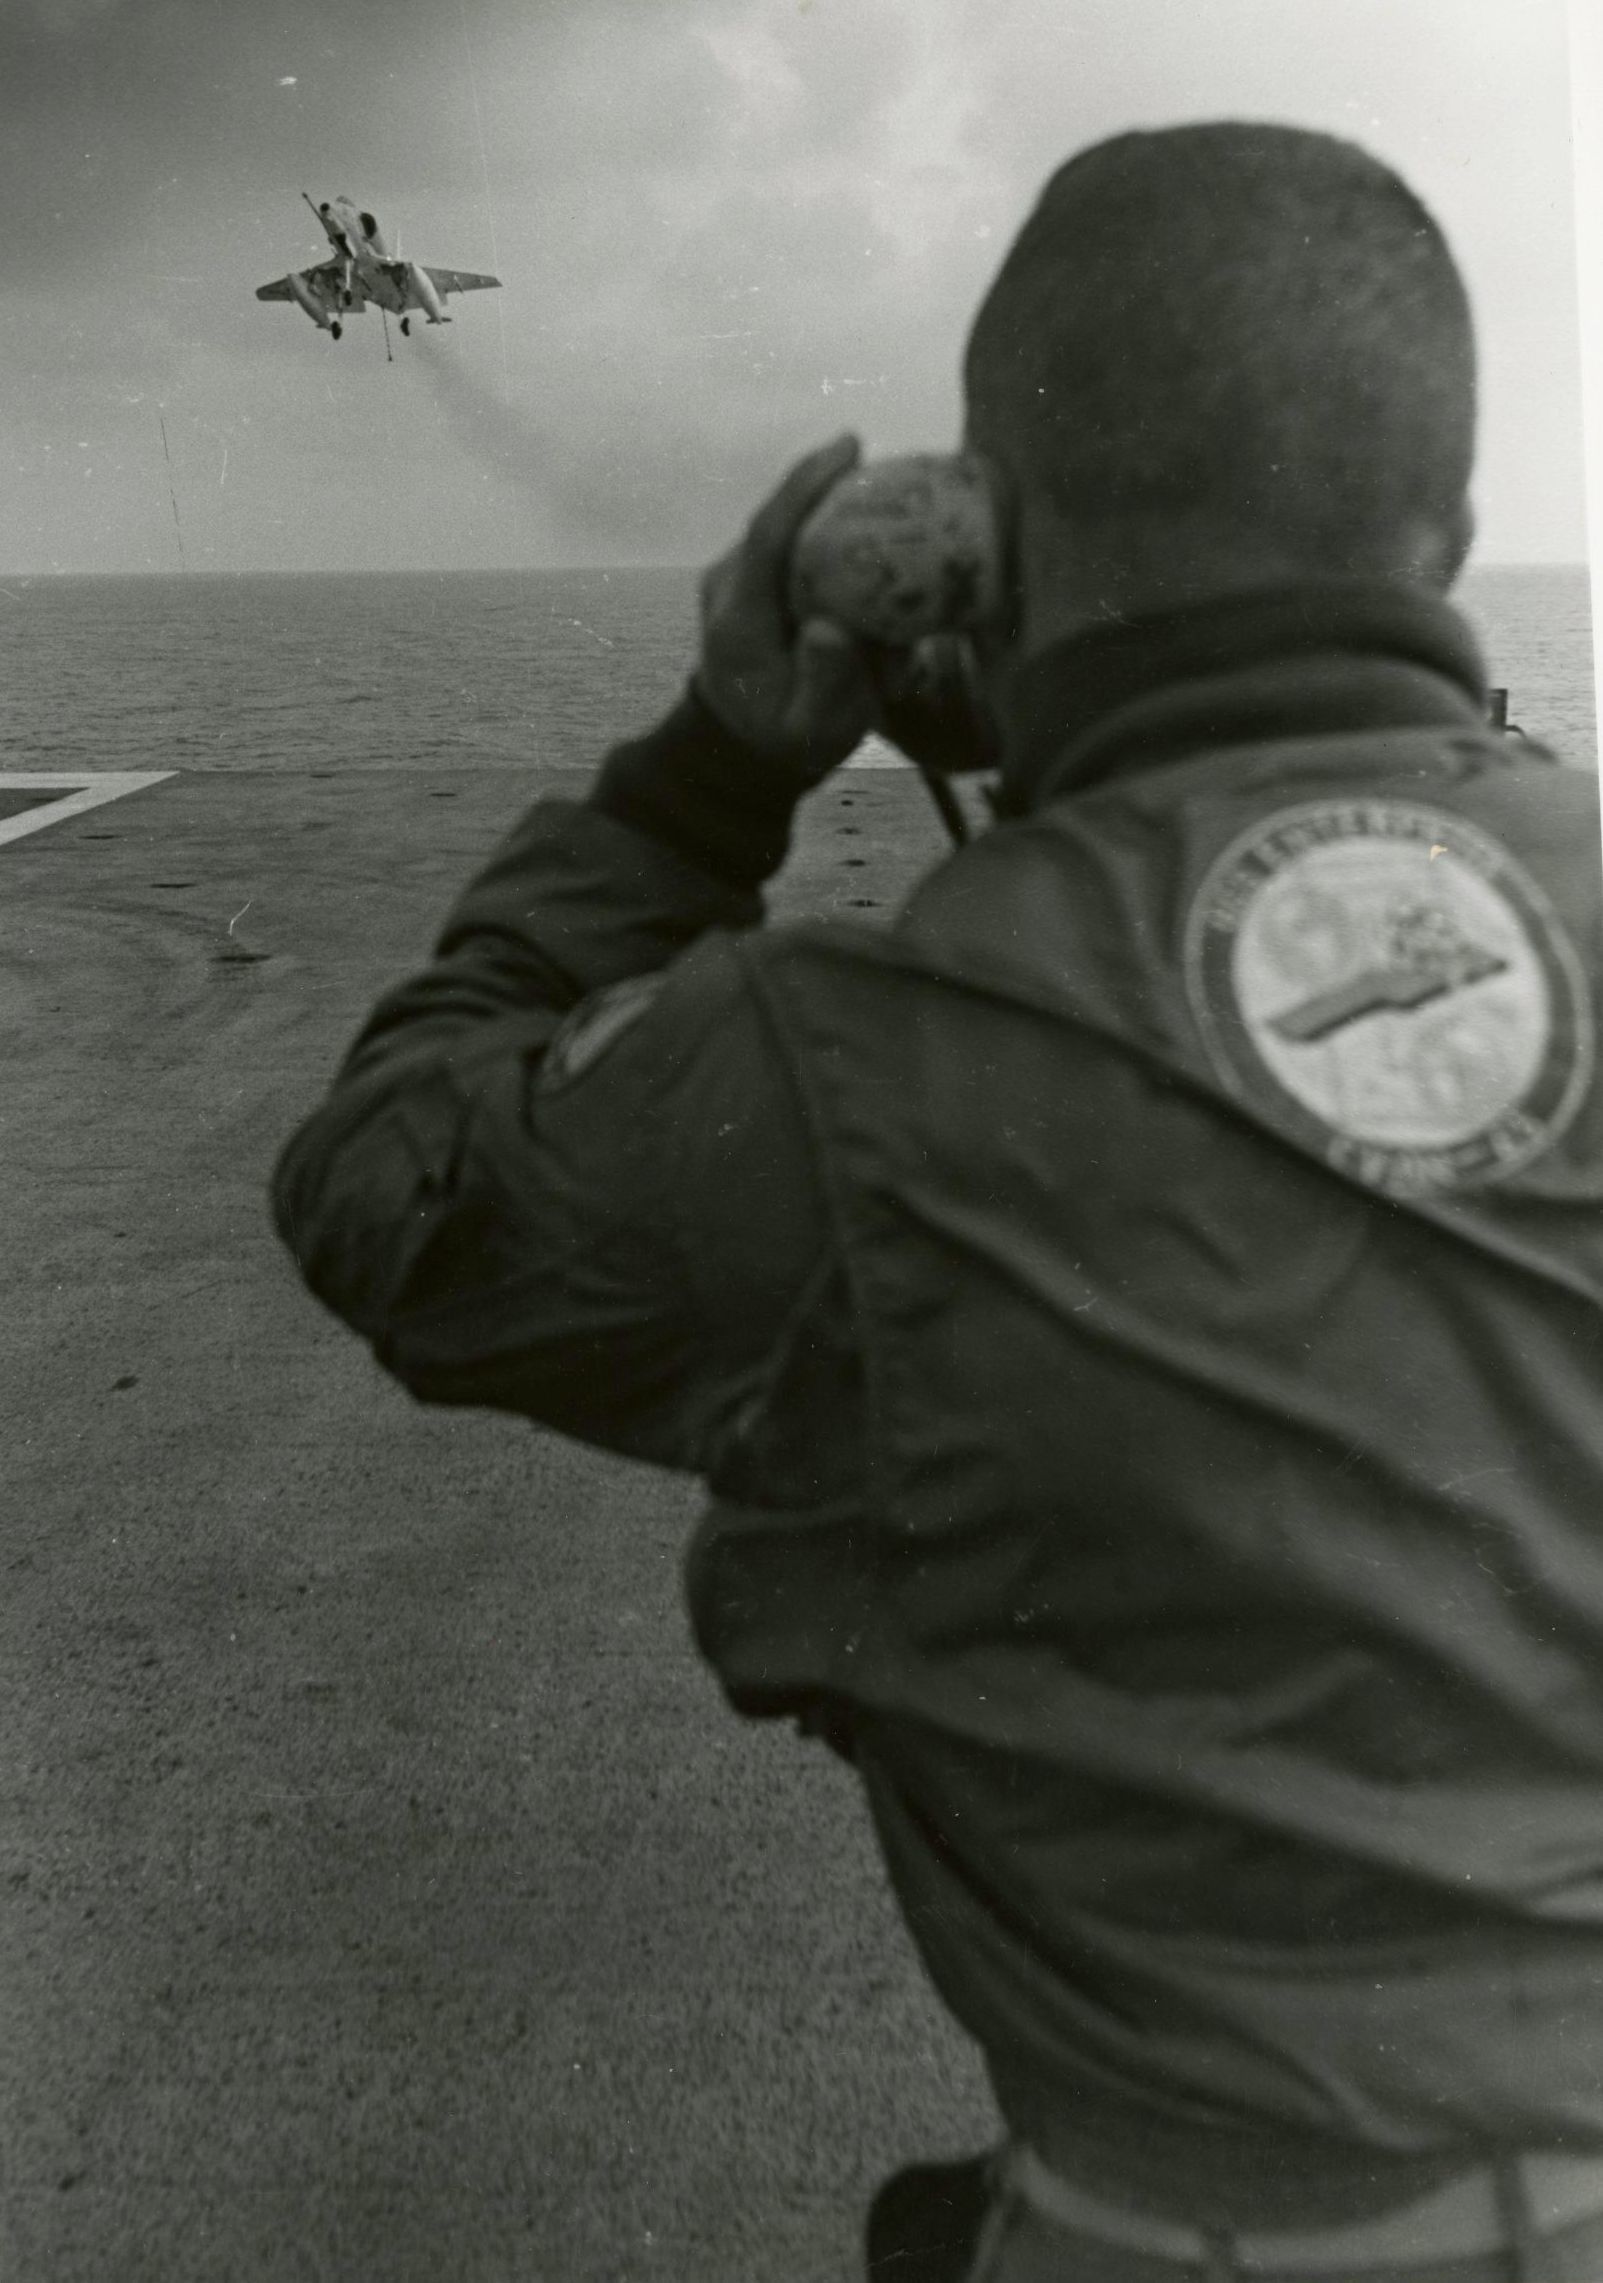 Primary Image of A-4 Skyhawk Landing on The USS Yorktown (CVS-10)